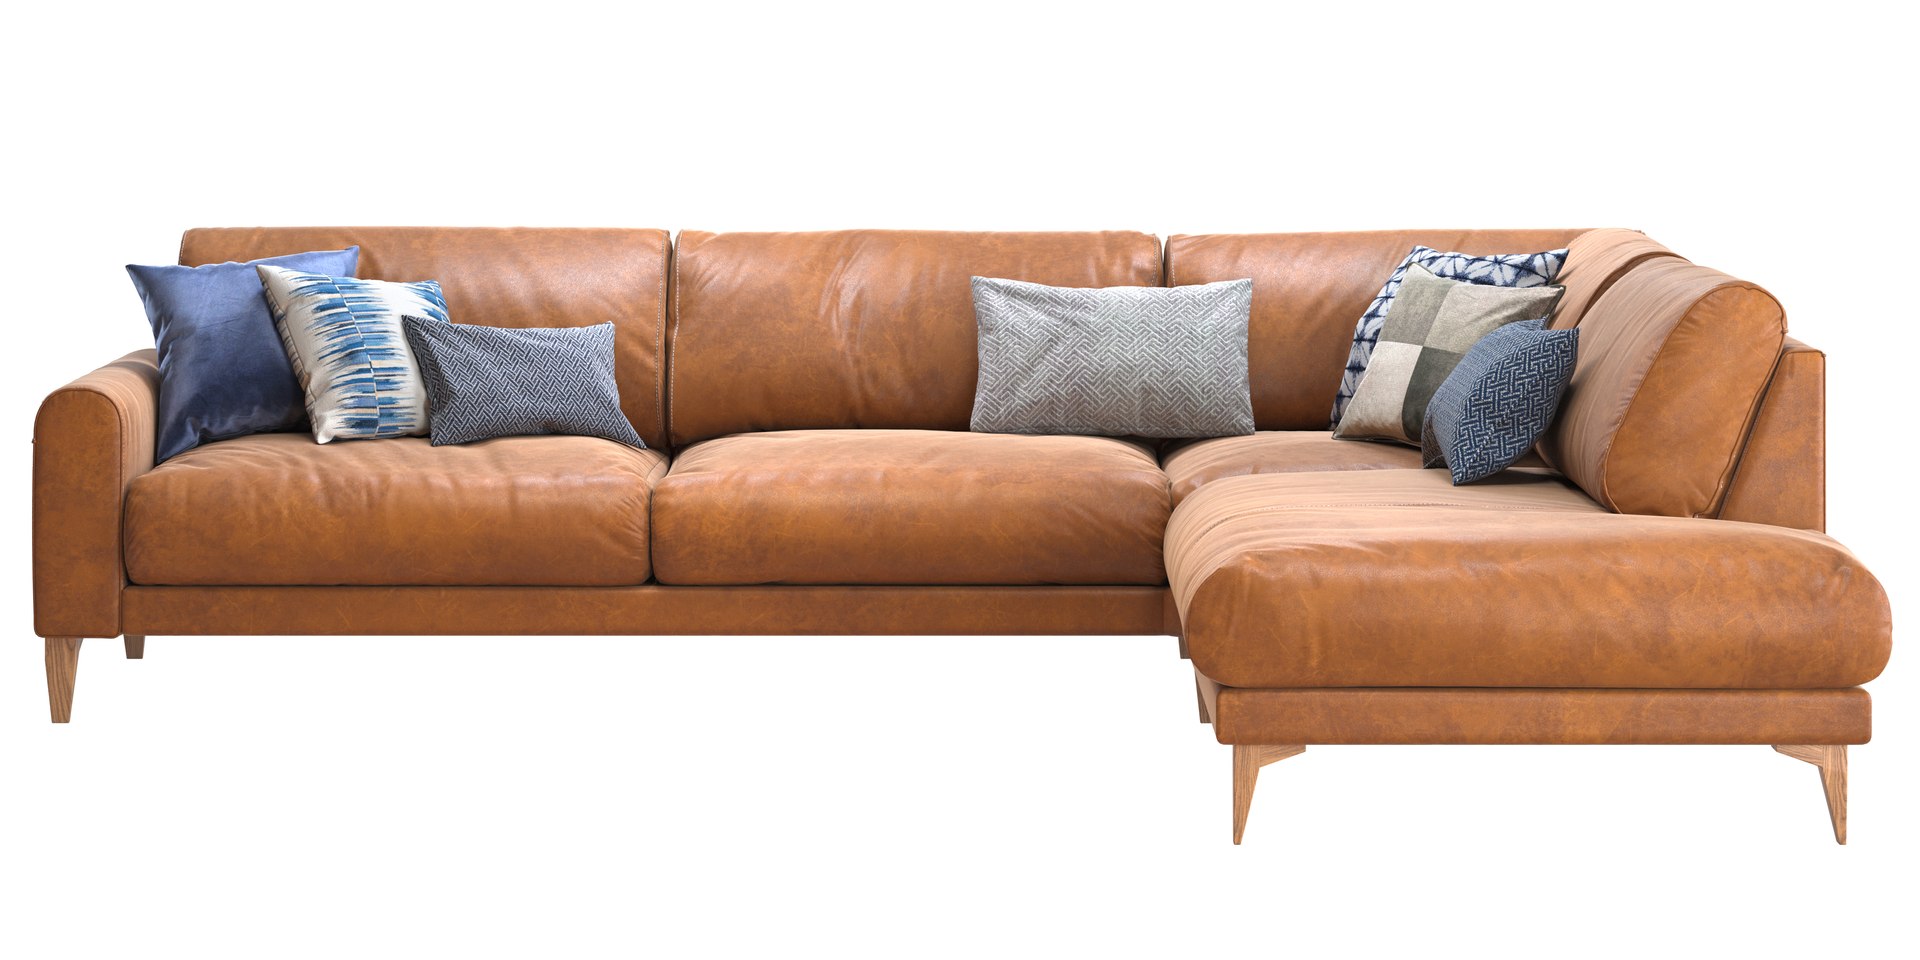 3D Joy sectional sofa 296 cm 2 - TurboSquid 1906717